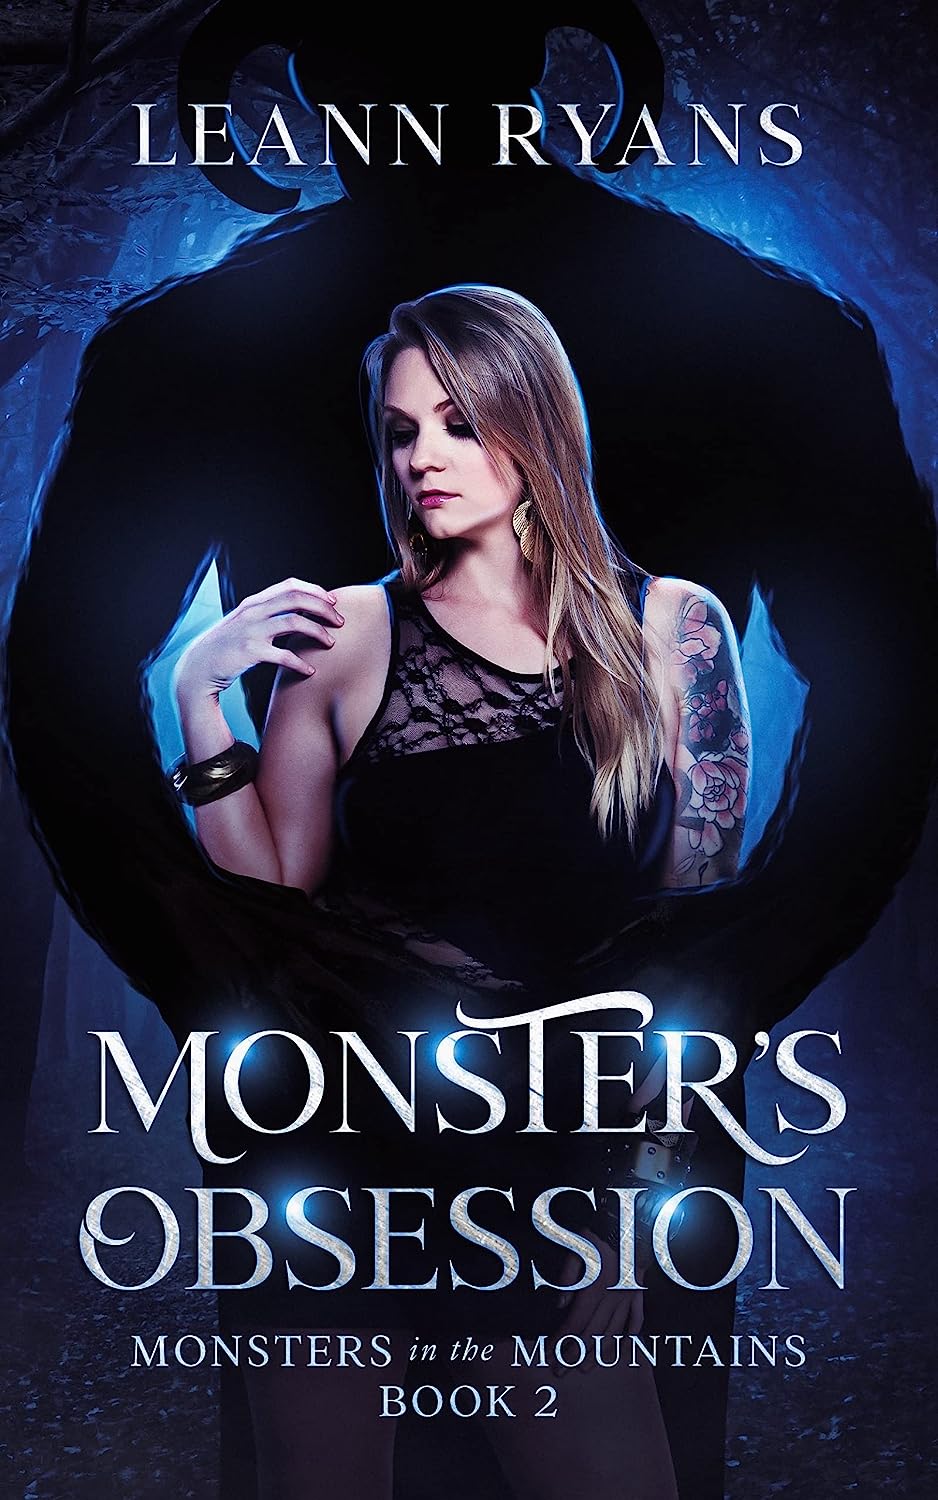 Monster’s Obsession by Leann Ryans